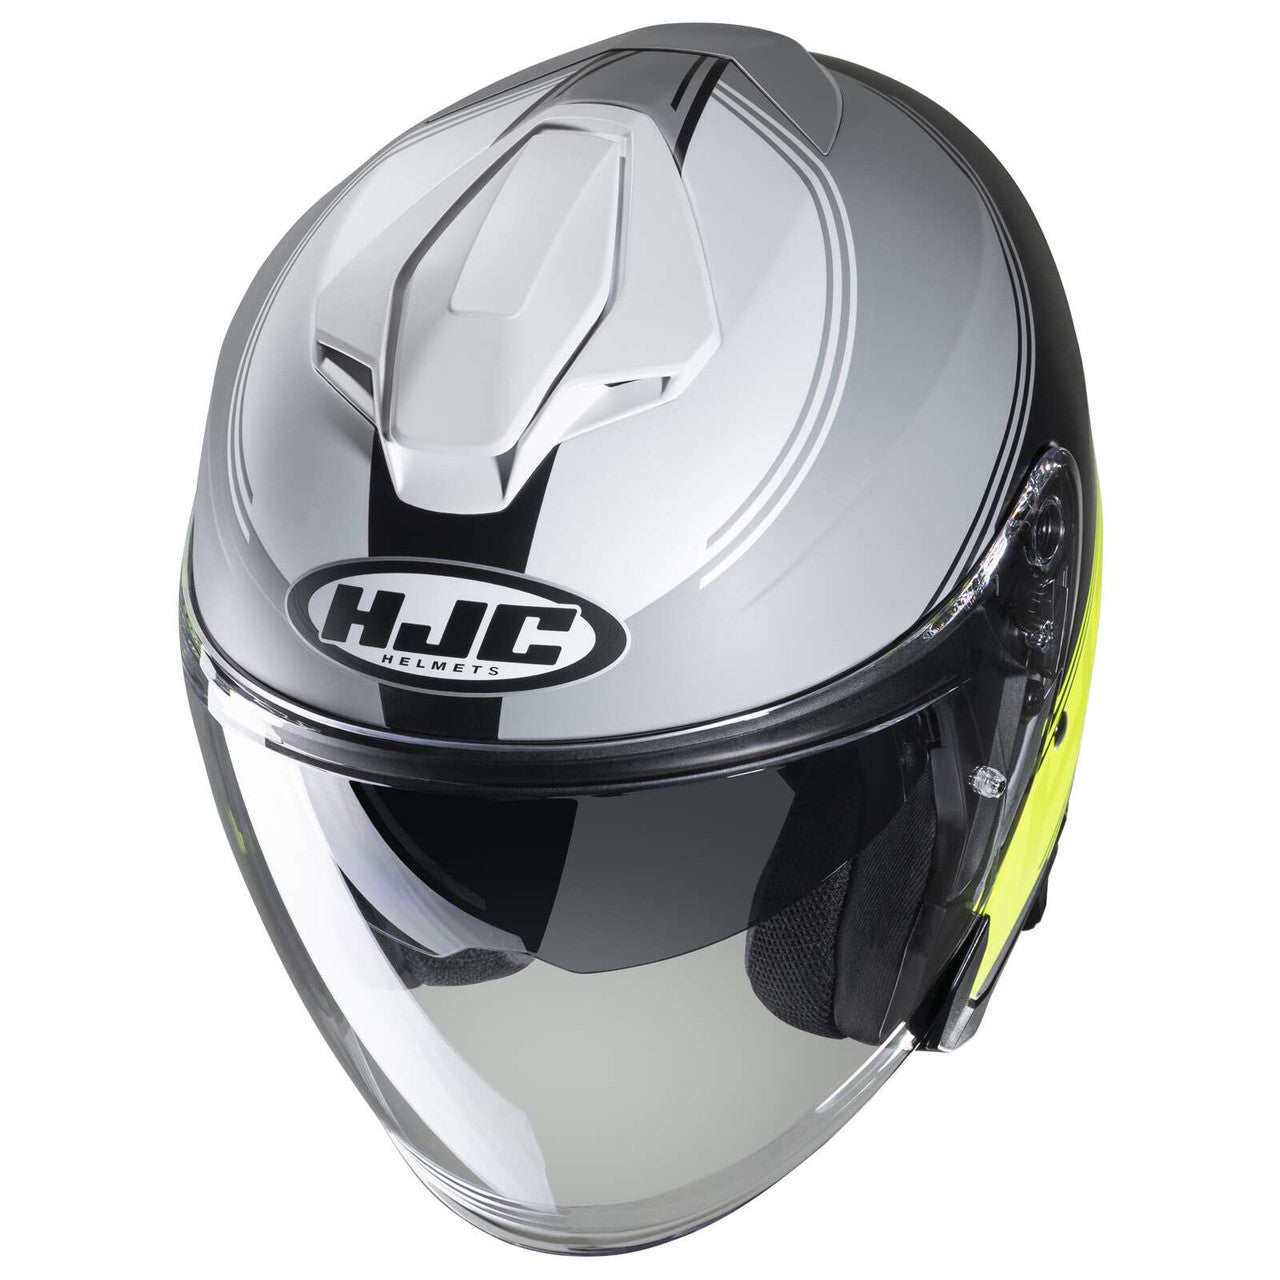 HJC-i30-Vicom-Open-Face-Motorcycle-Helmet-Grey-Black-Hi-Viz-top-view